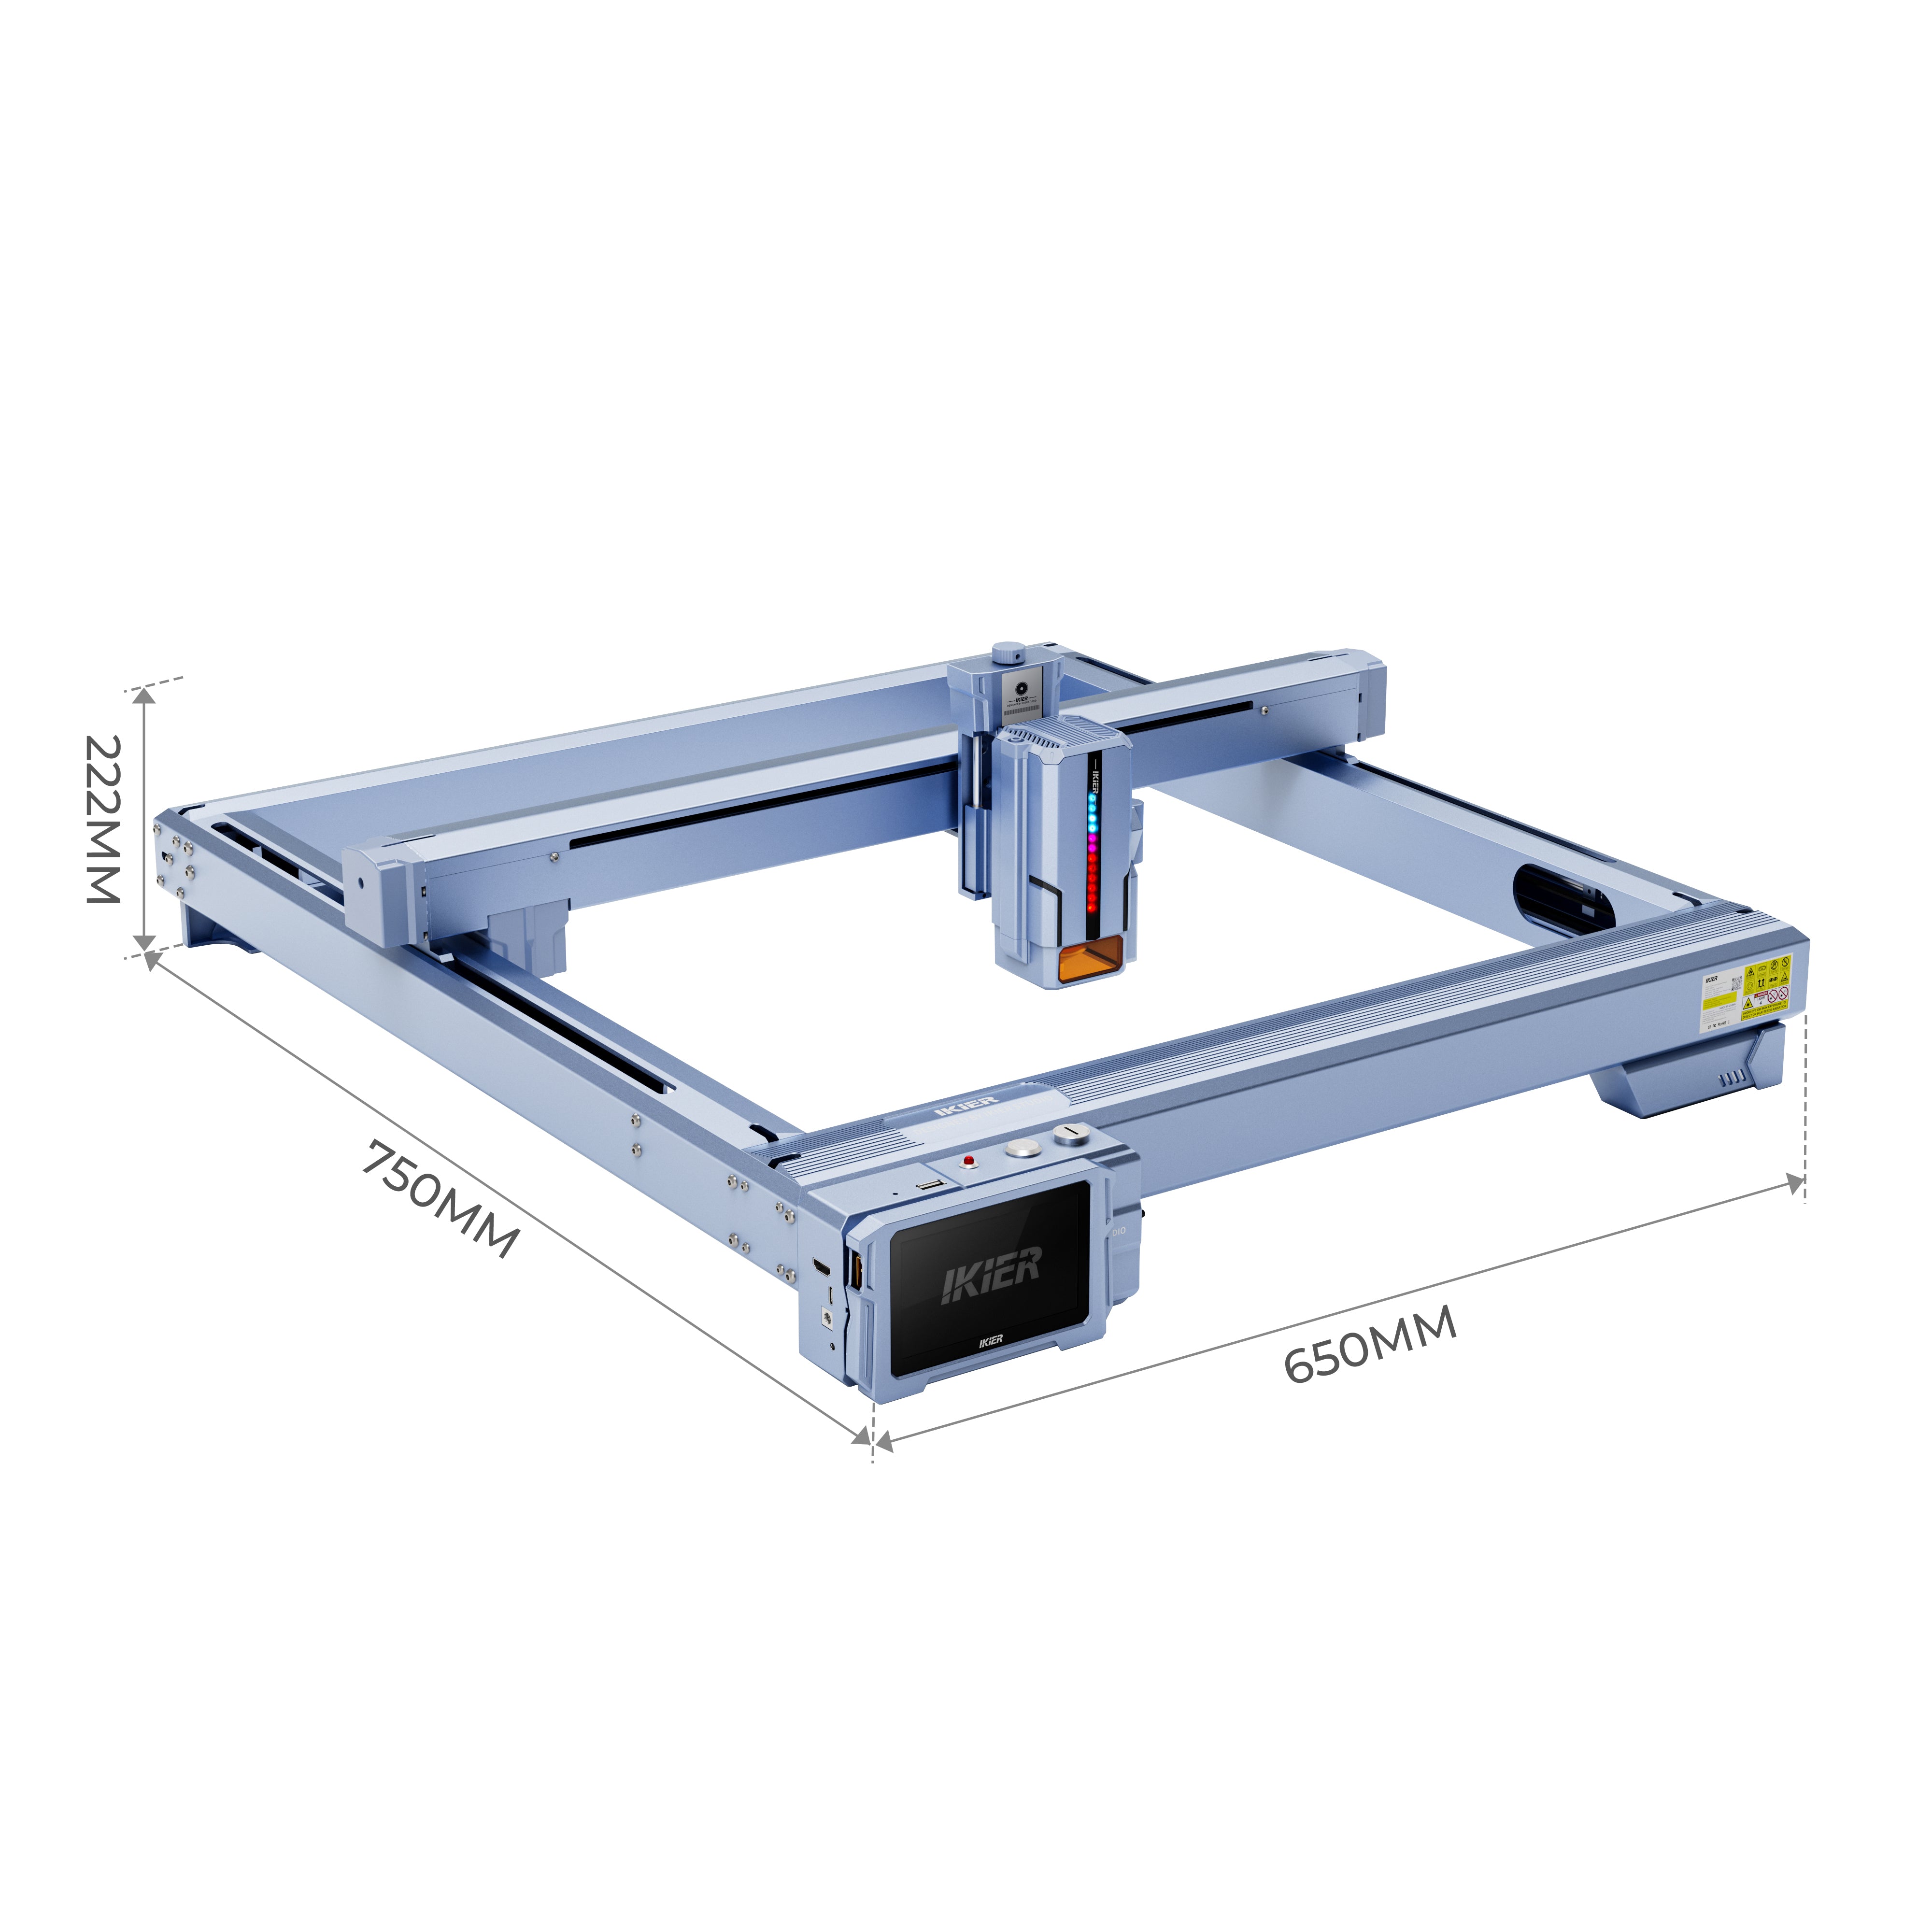 iKier K1 Ultra 36W Laser Engraving and Cutting Machine Size